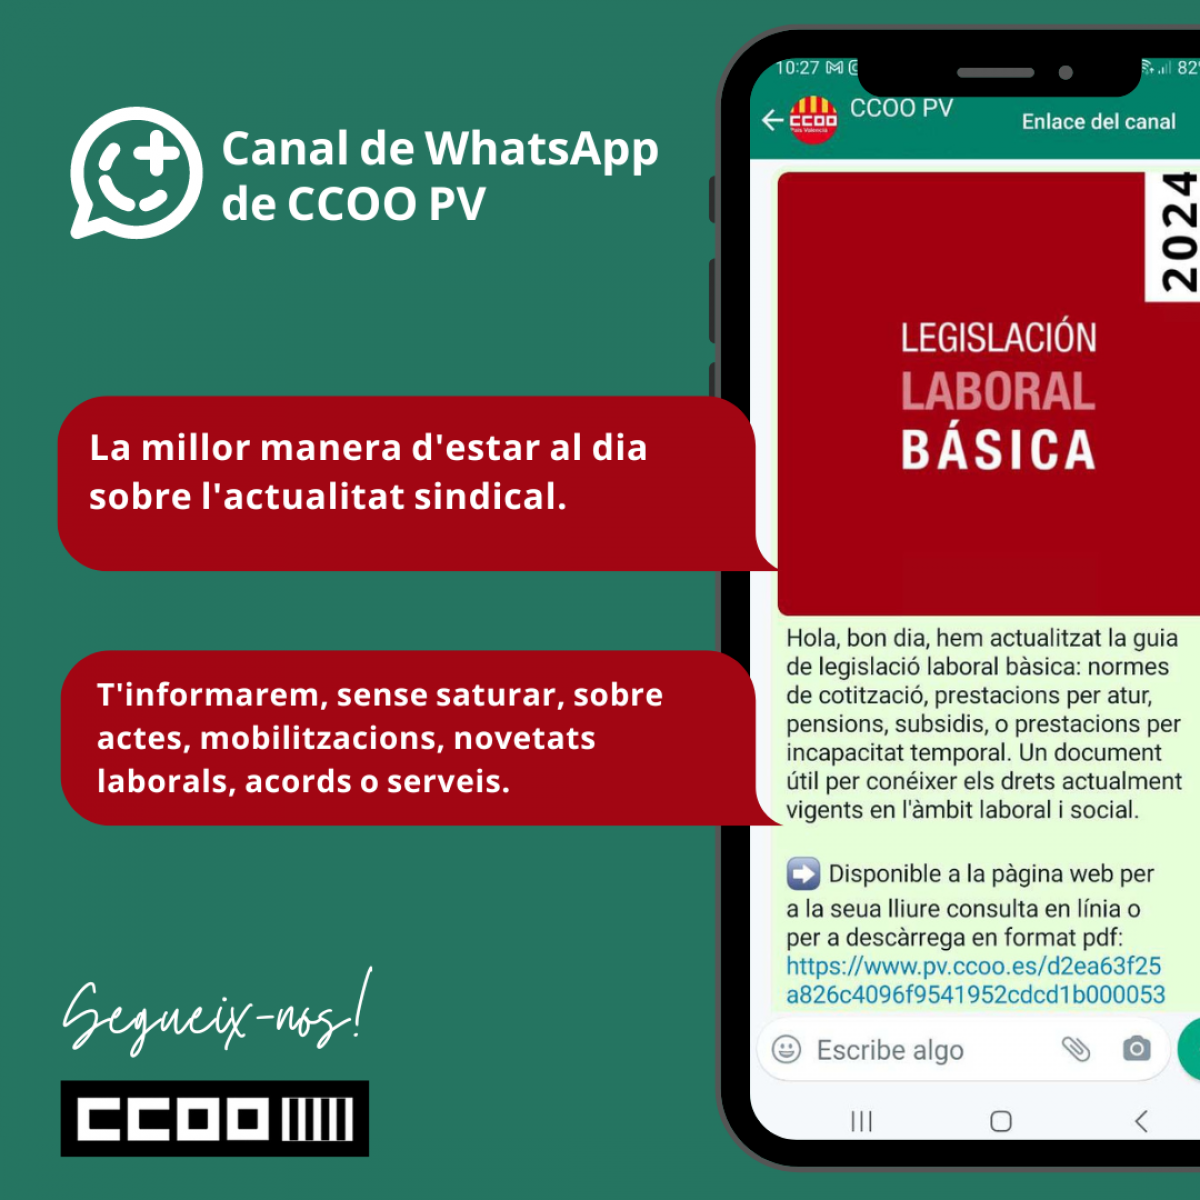 CCOO PV obri un canal de WhatsApp